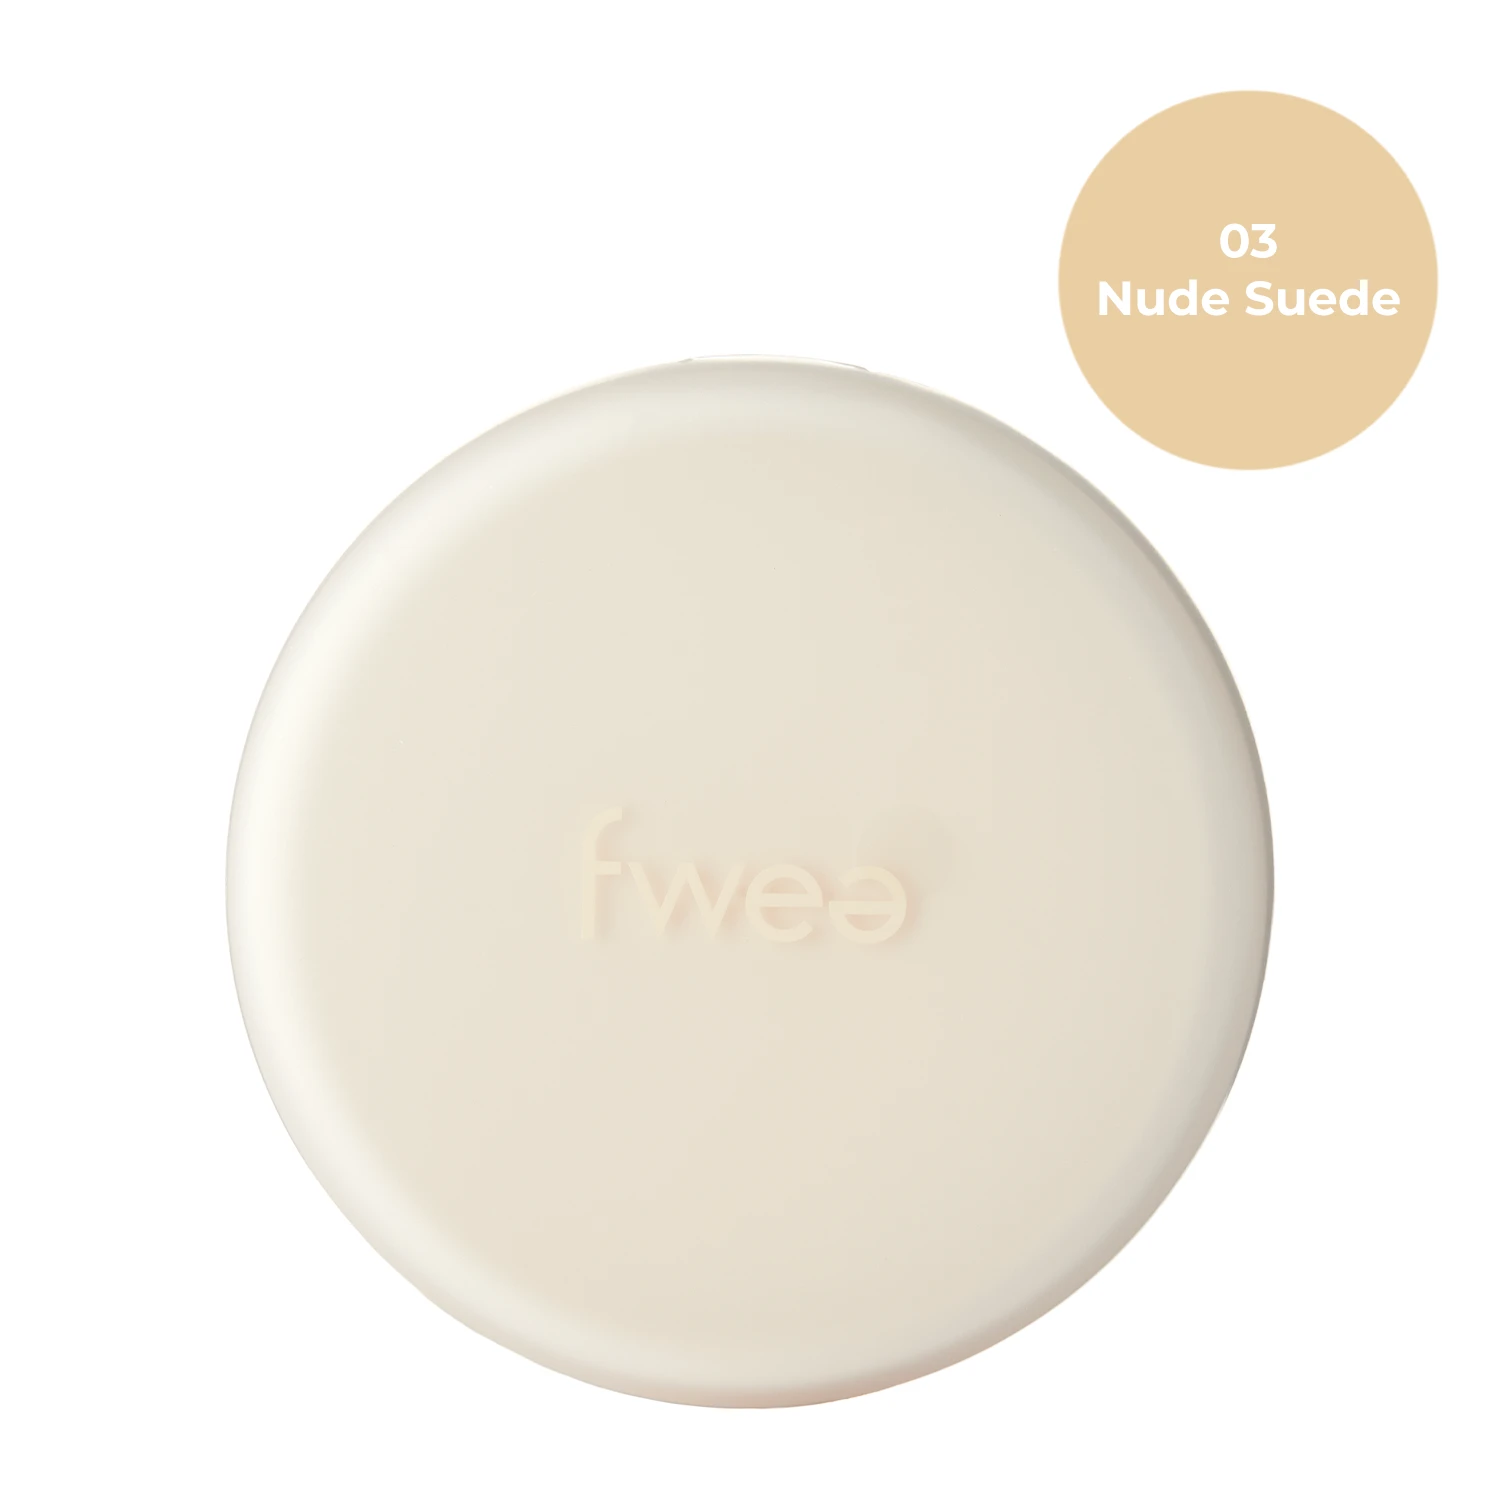 Fwee - Cushion Suede SPF50+ PA+++ - Зволожувальний тональний кушон для обличчя - 03 Nude Suede - 15g